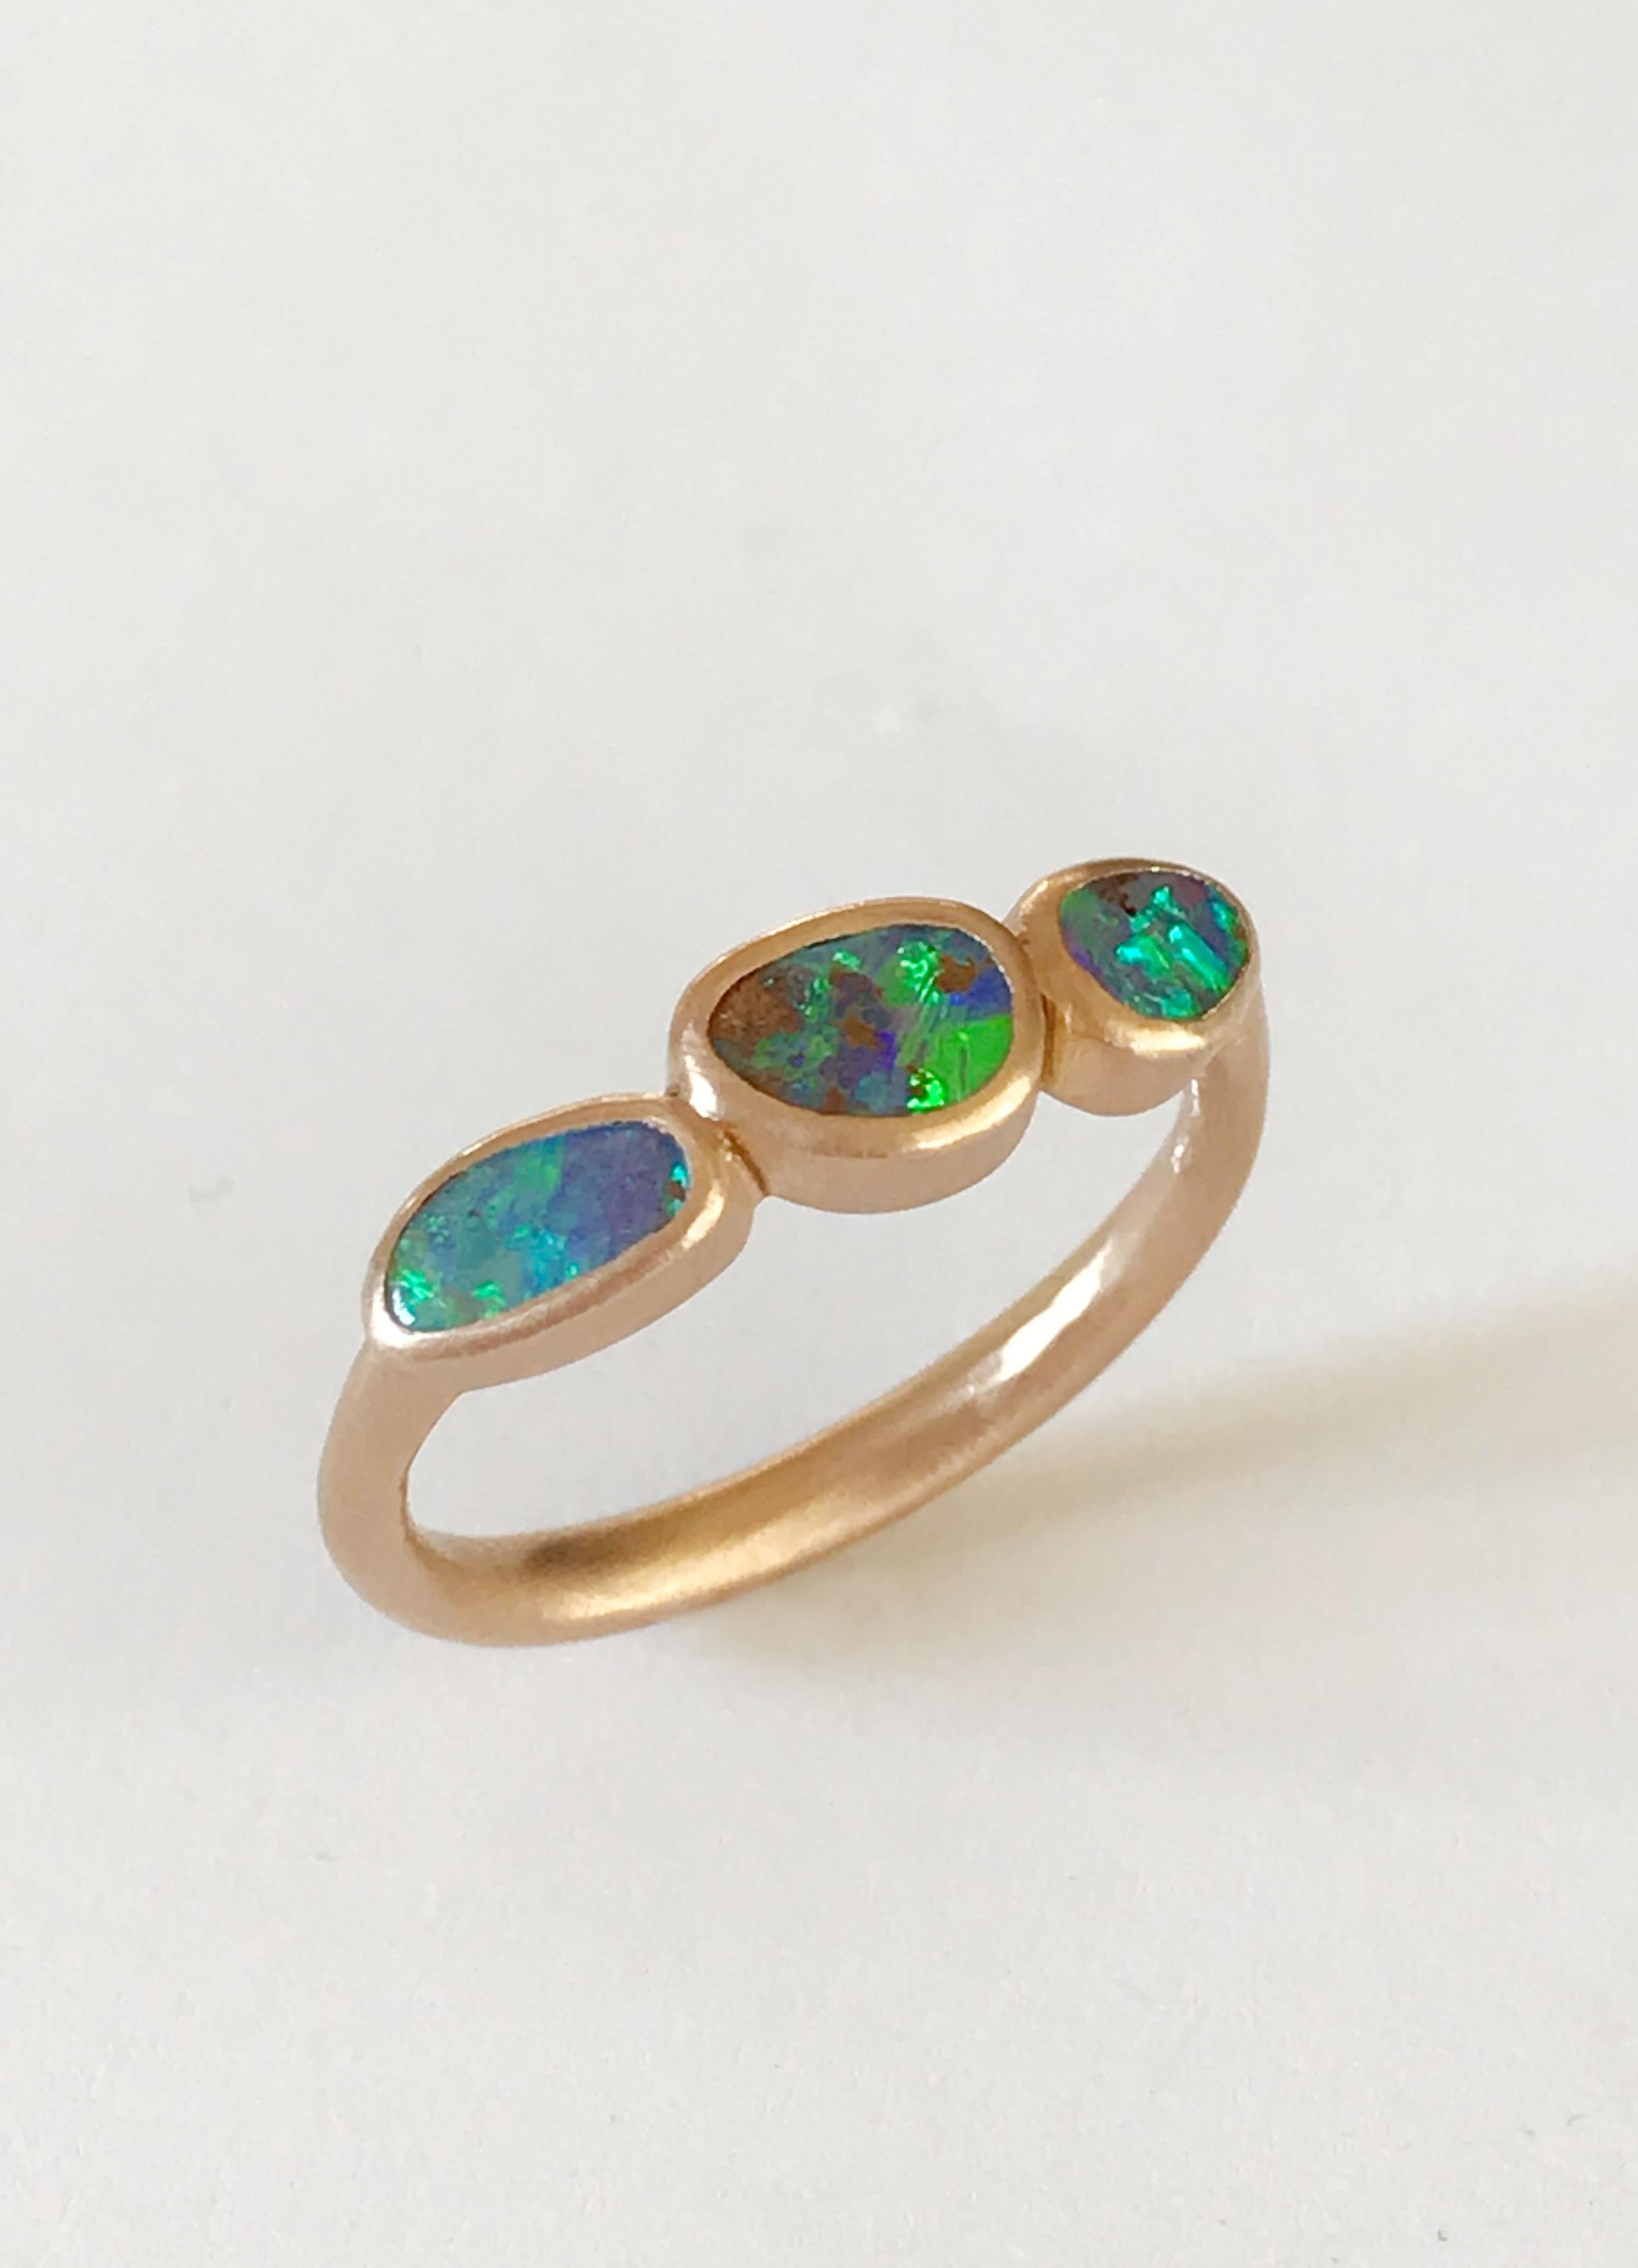 Rough Cut Dalben Small Trilogy Boulder Opal Rose Gold Ring